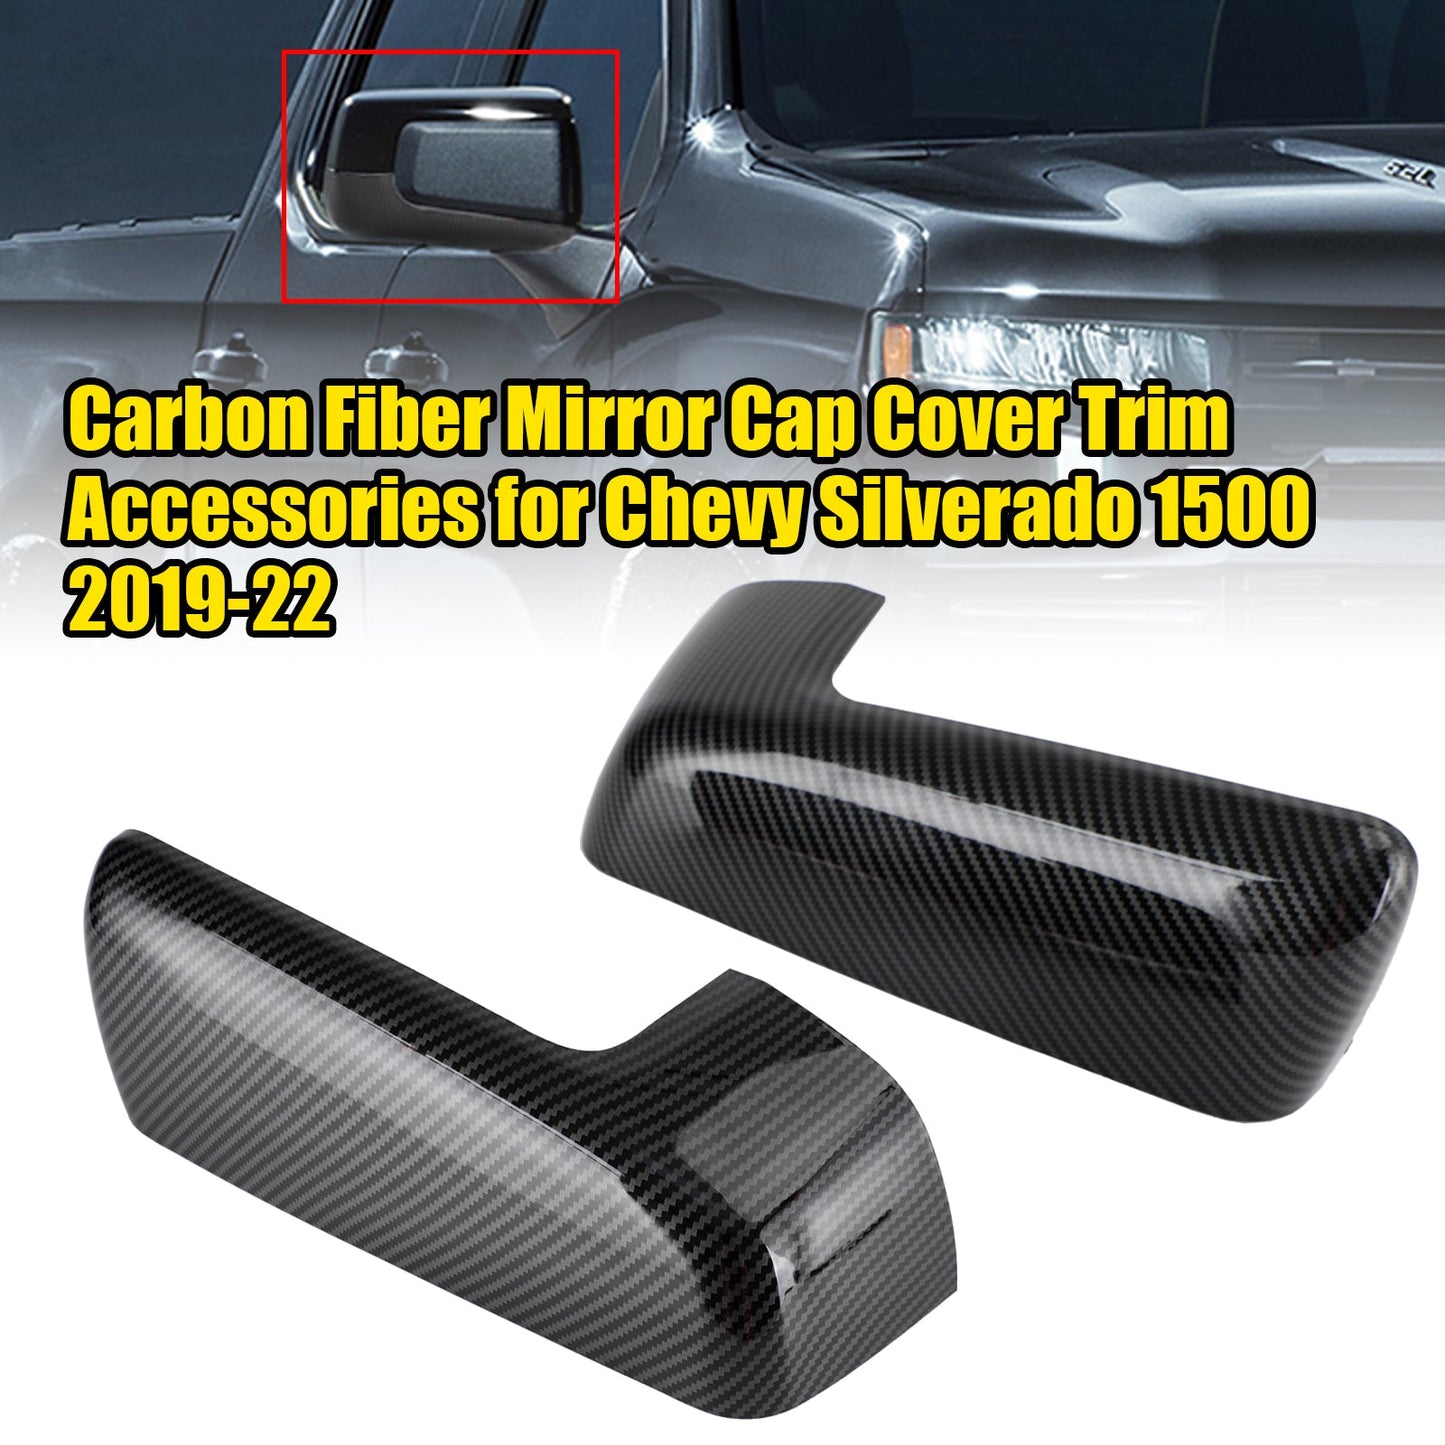 Carbon Fiber Mirror Cap Cover Trim Accessories for Chevy Silverado 1500 2019-22